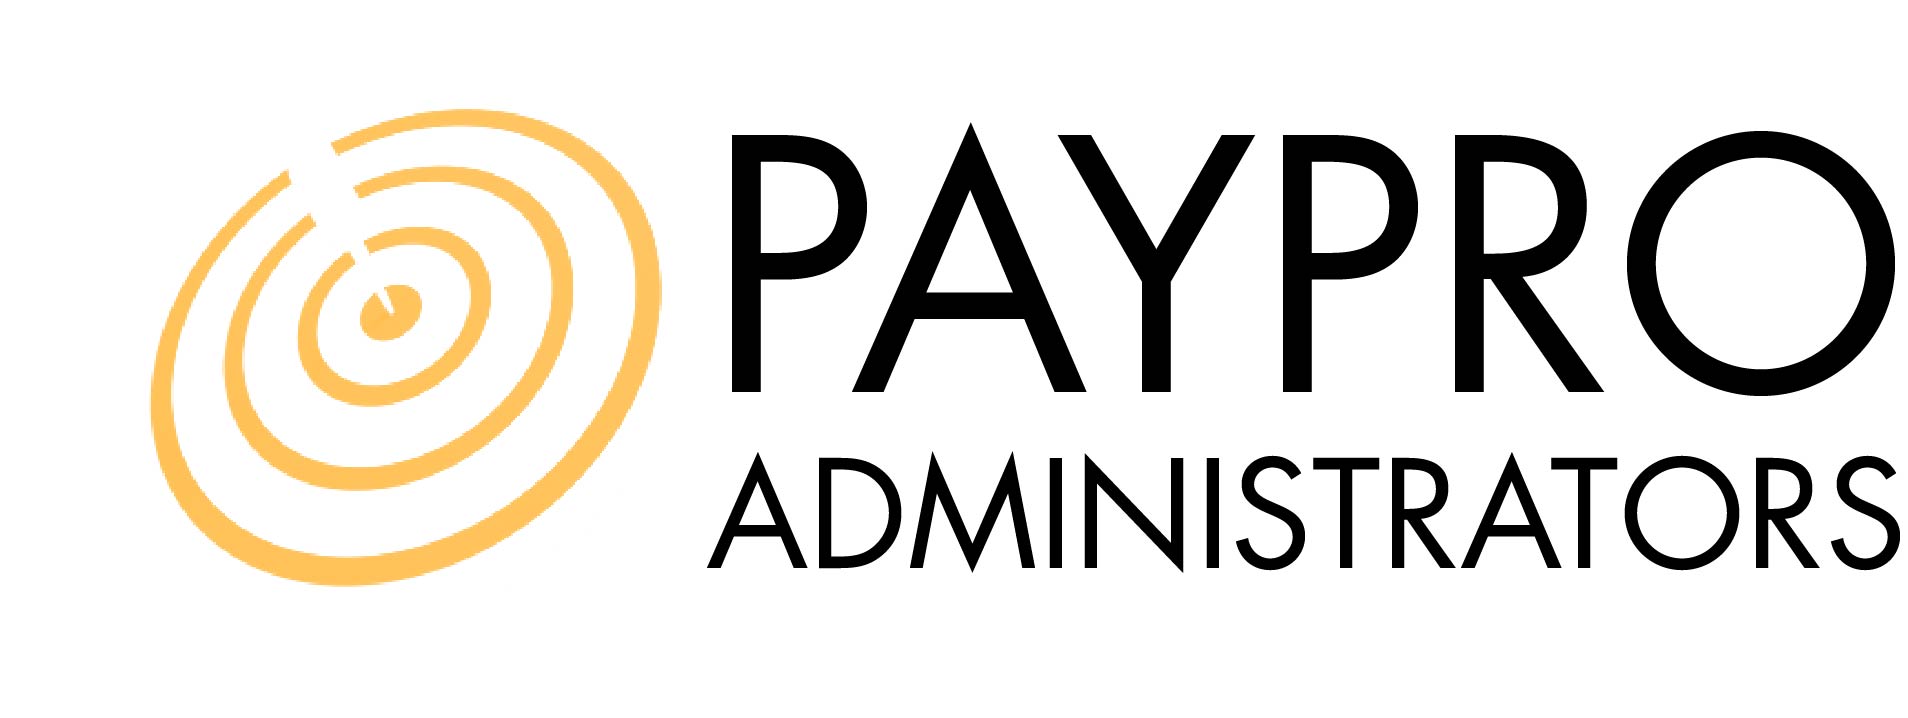 PayPro Administrators (Copy) (Copy)